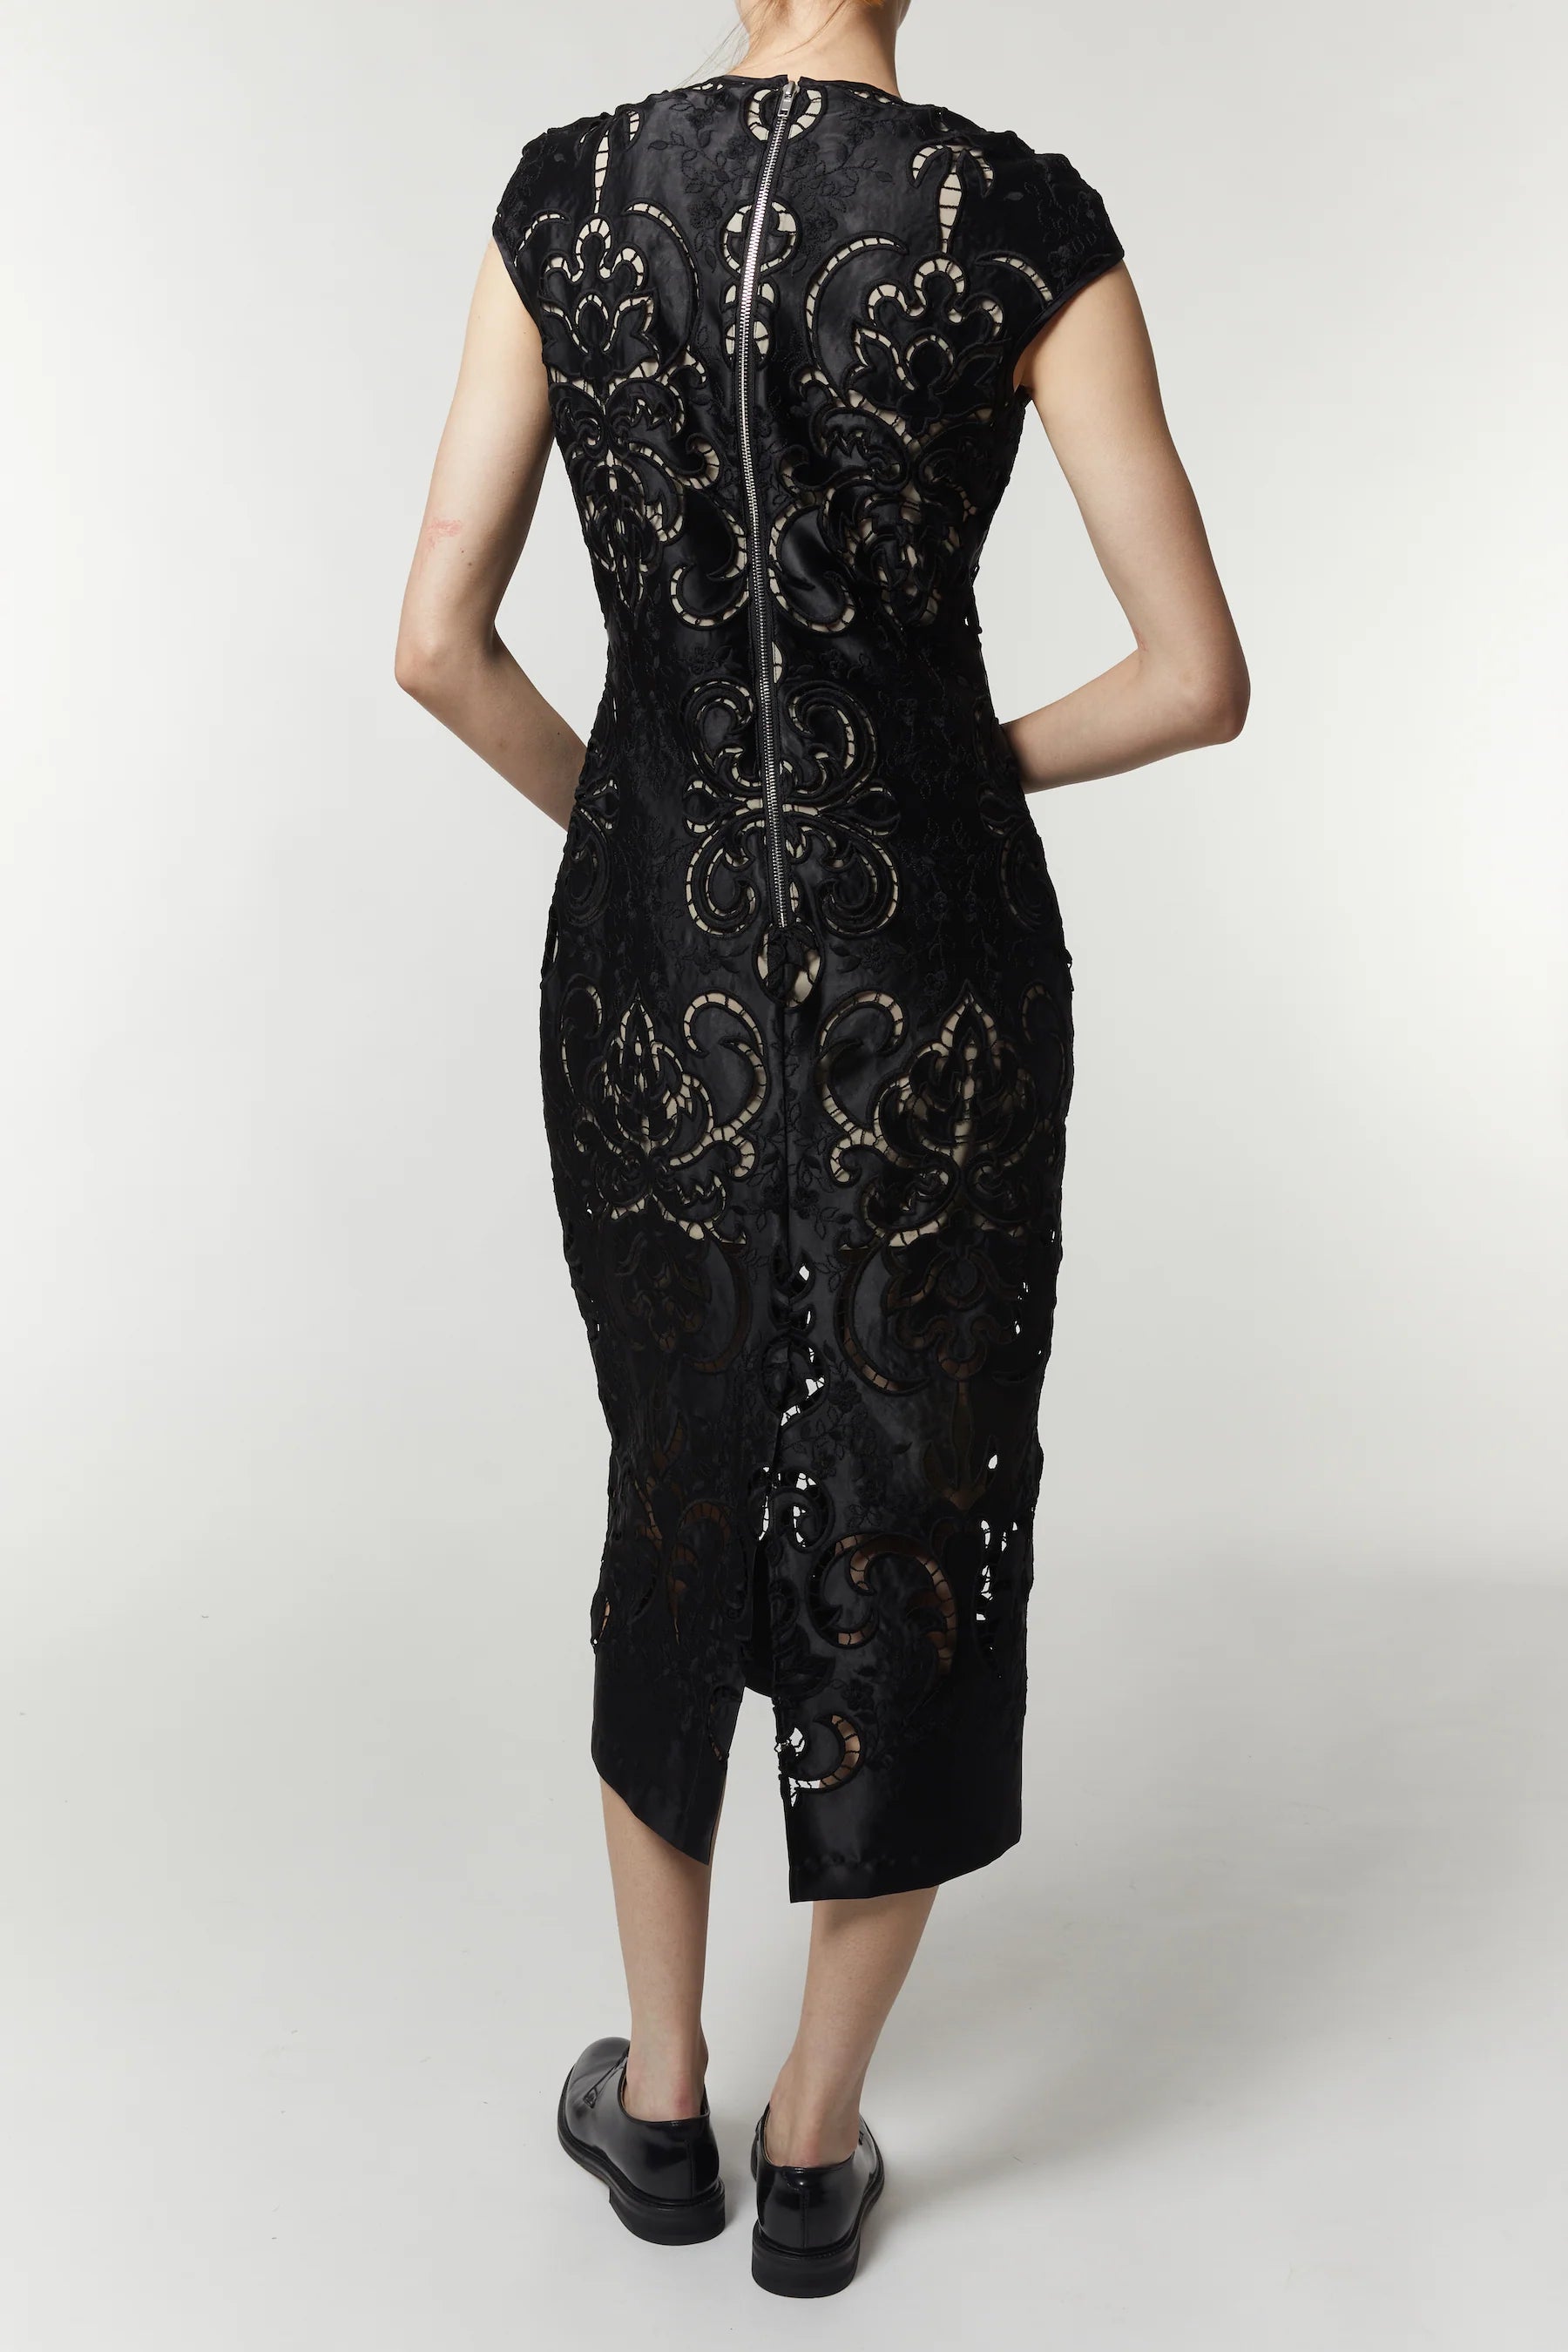 Saint Art Aida Cut Out Dress Black Lace